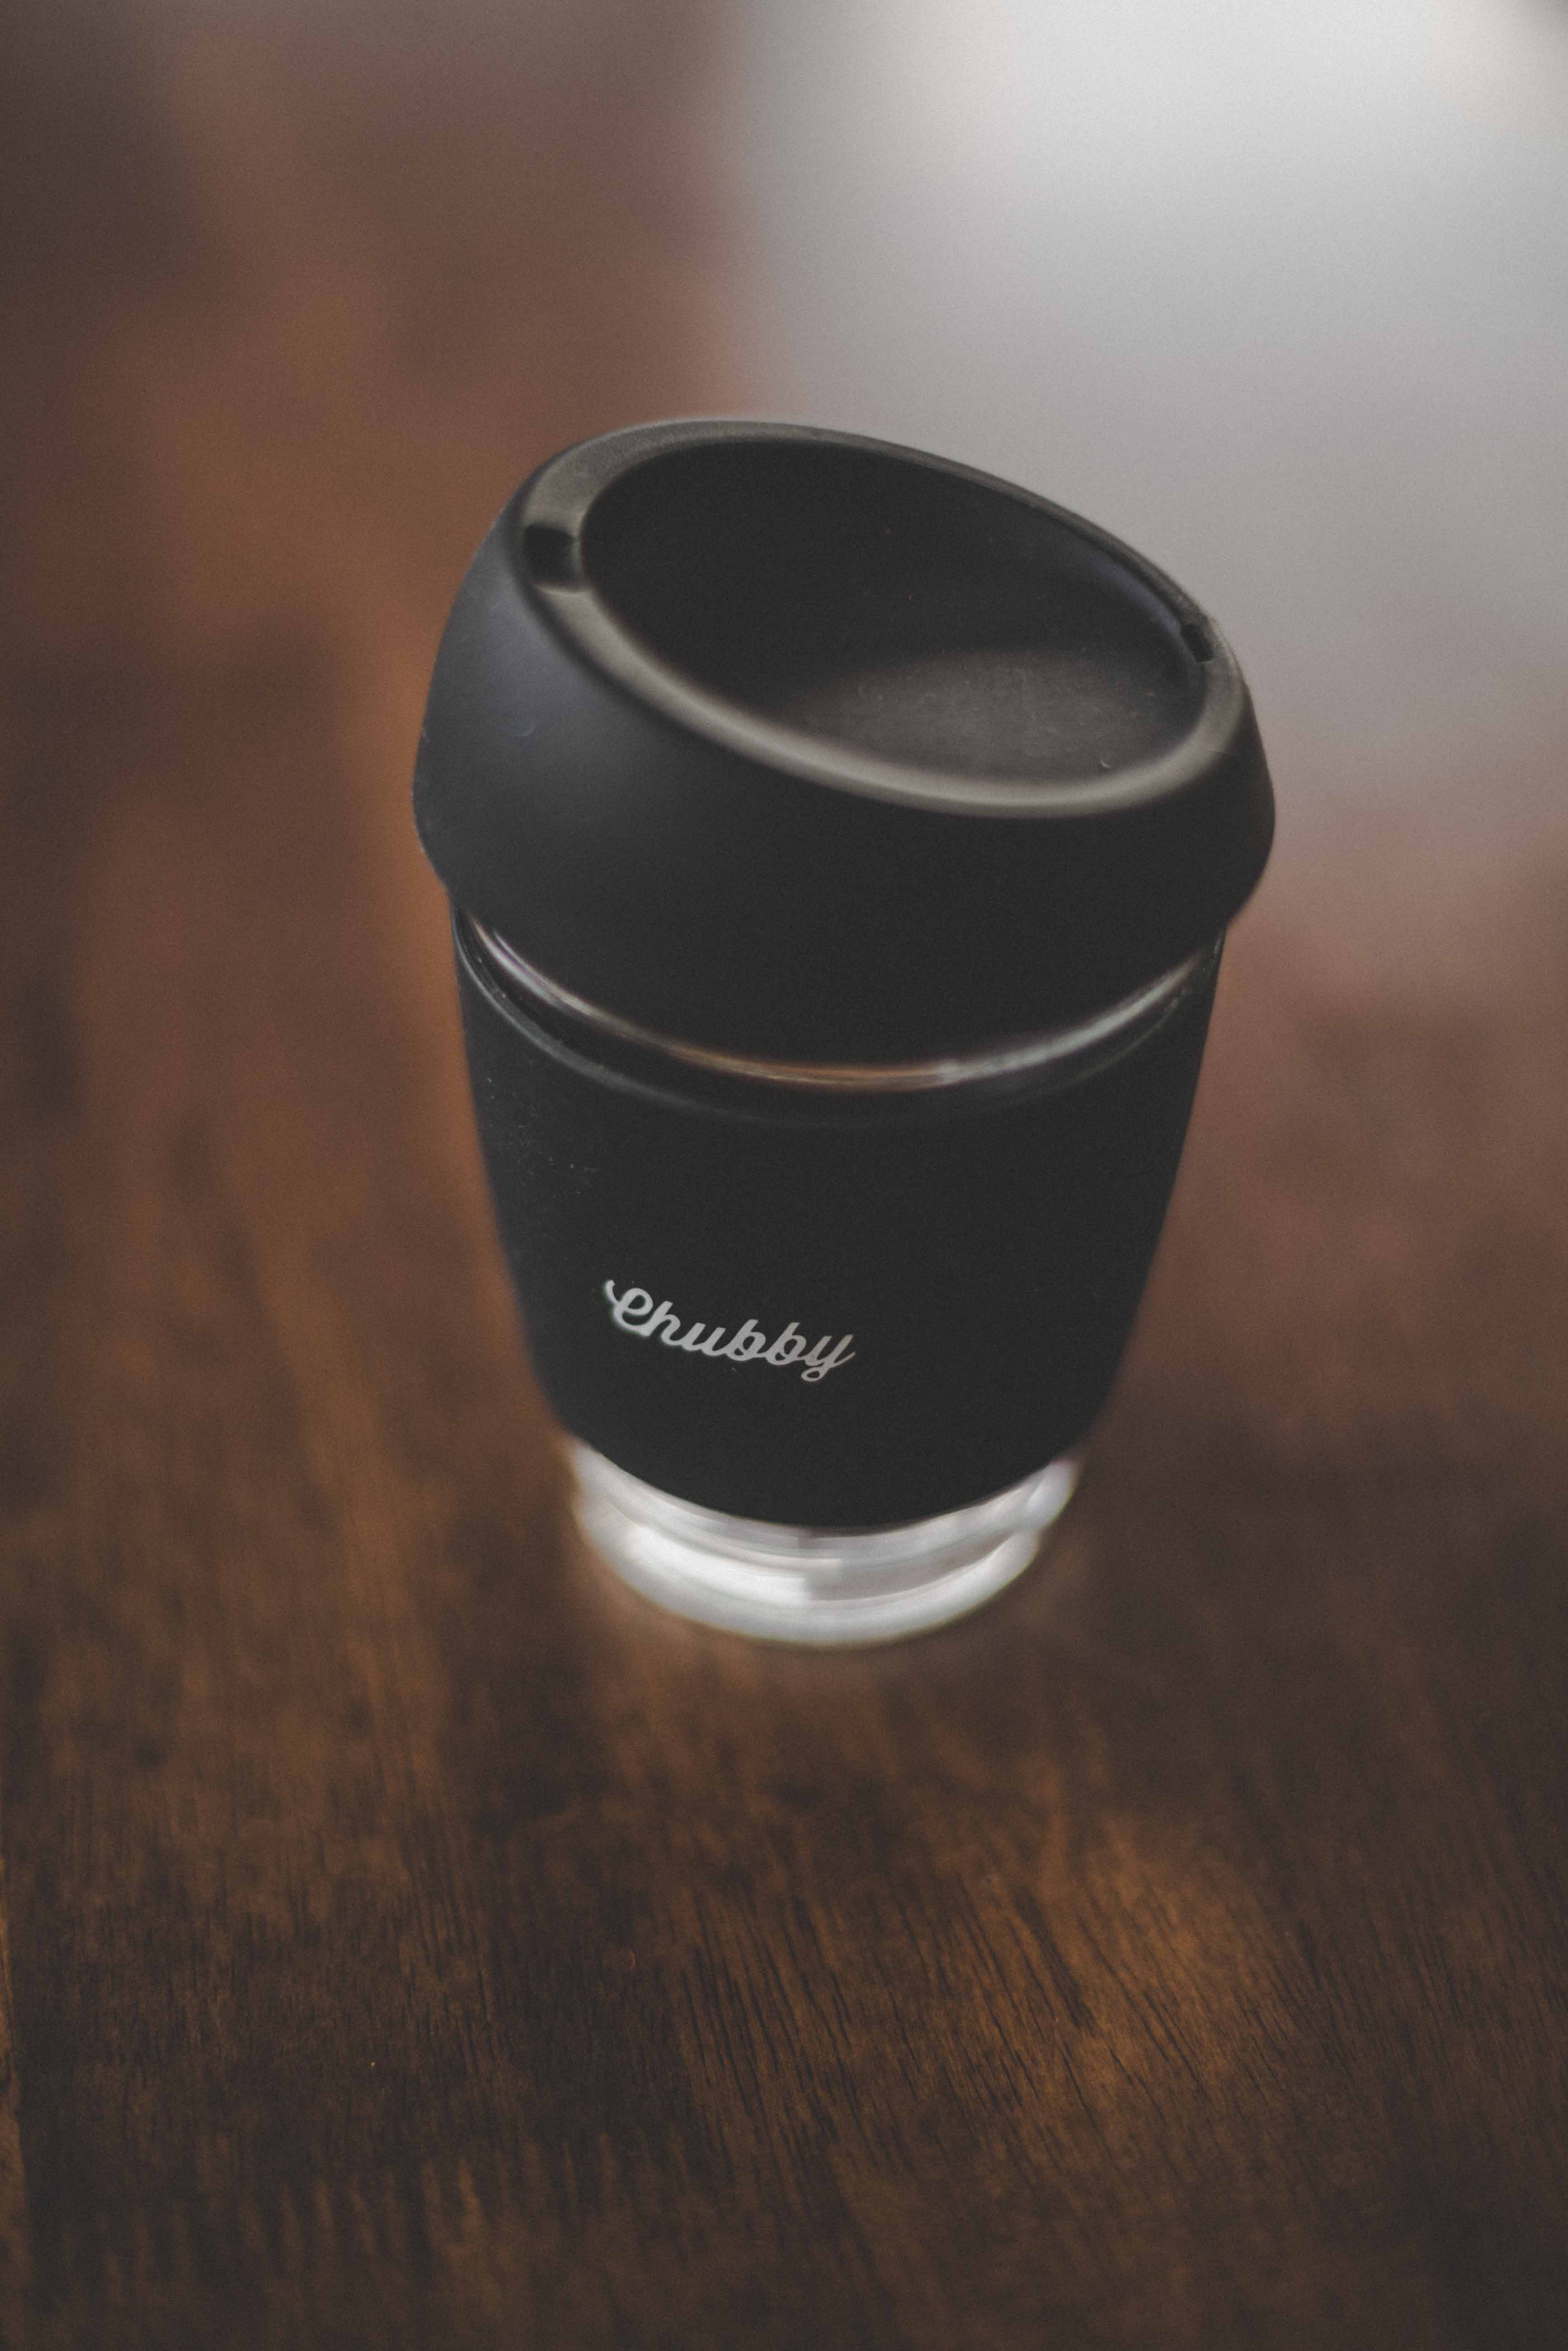 Chubby Reusable Glass Coffee Cup